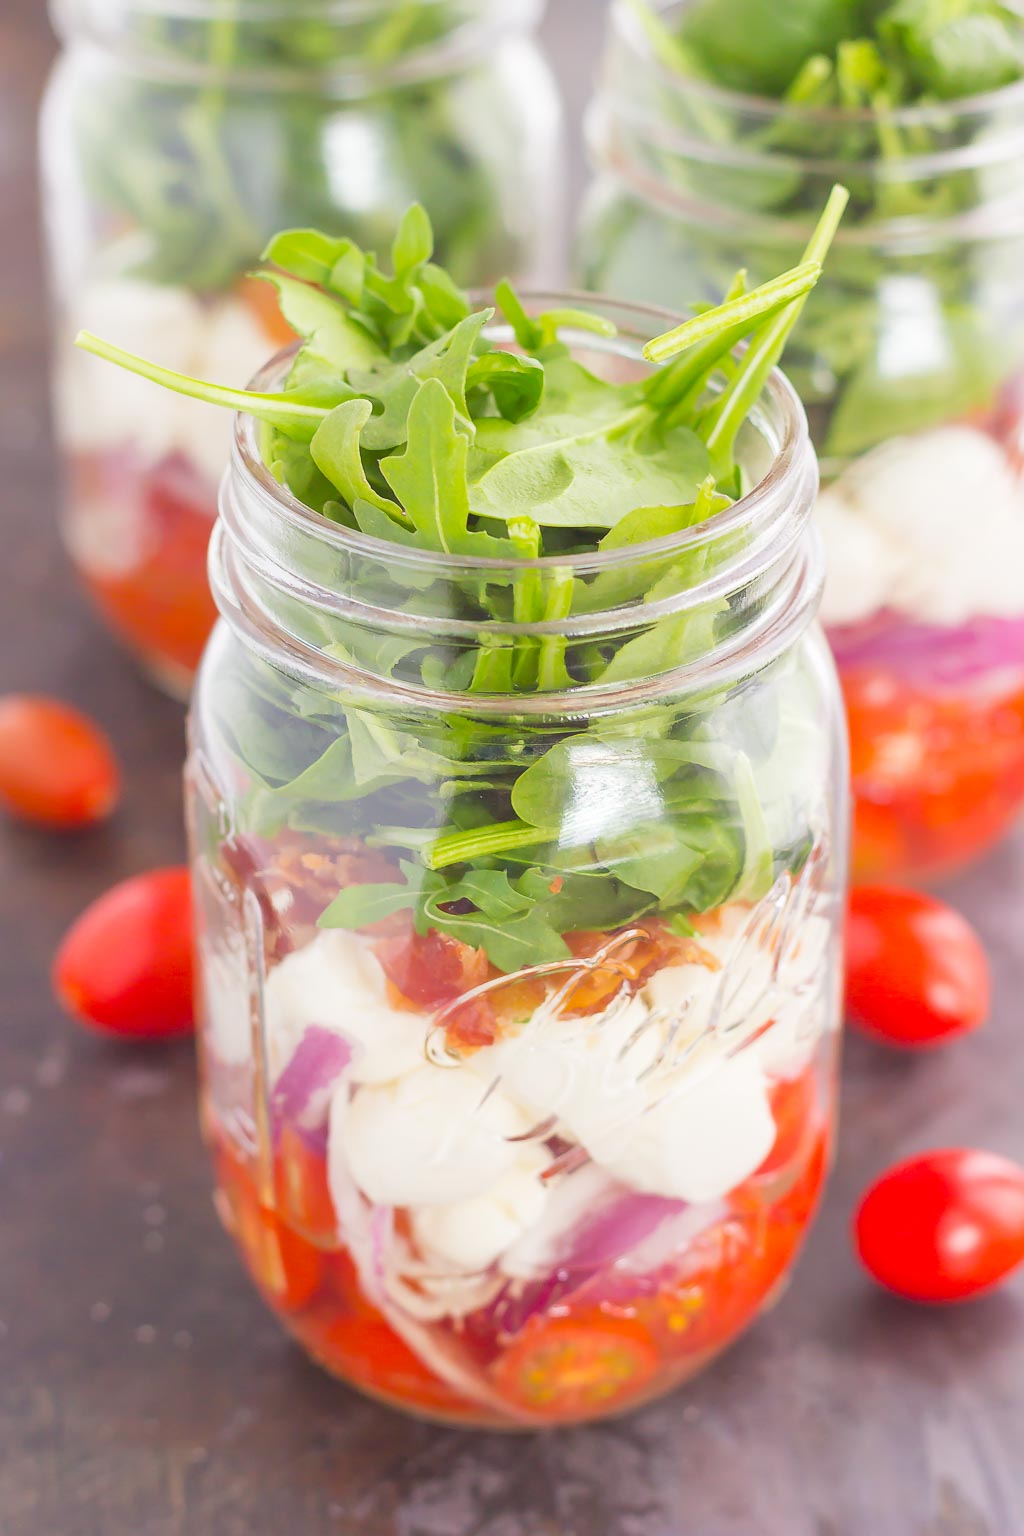 Mason Jar Salad - Make Salad in a Jar!